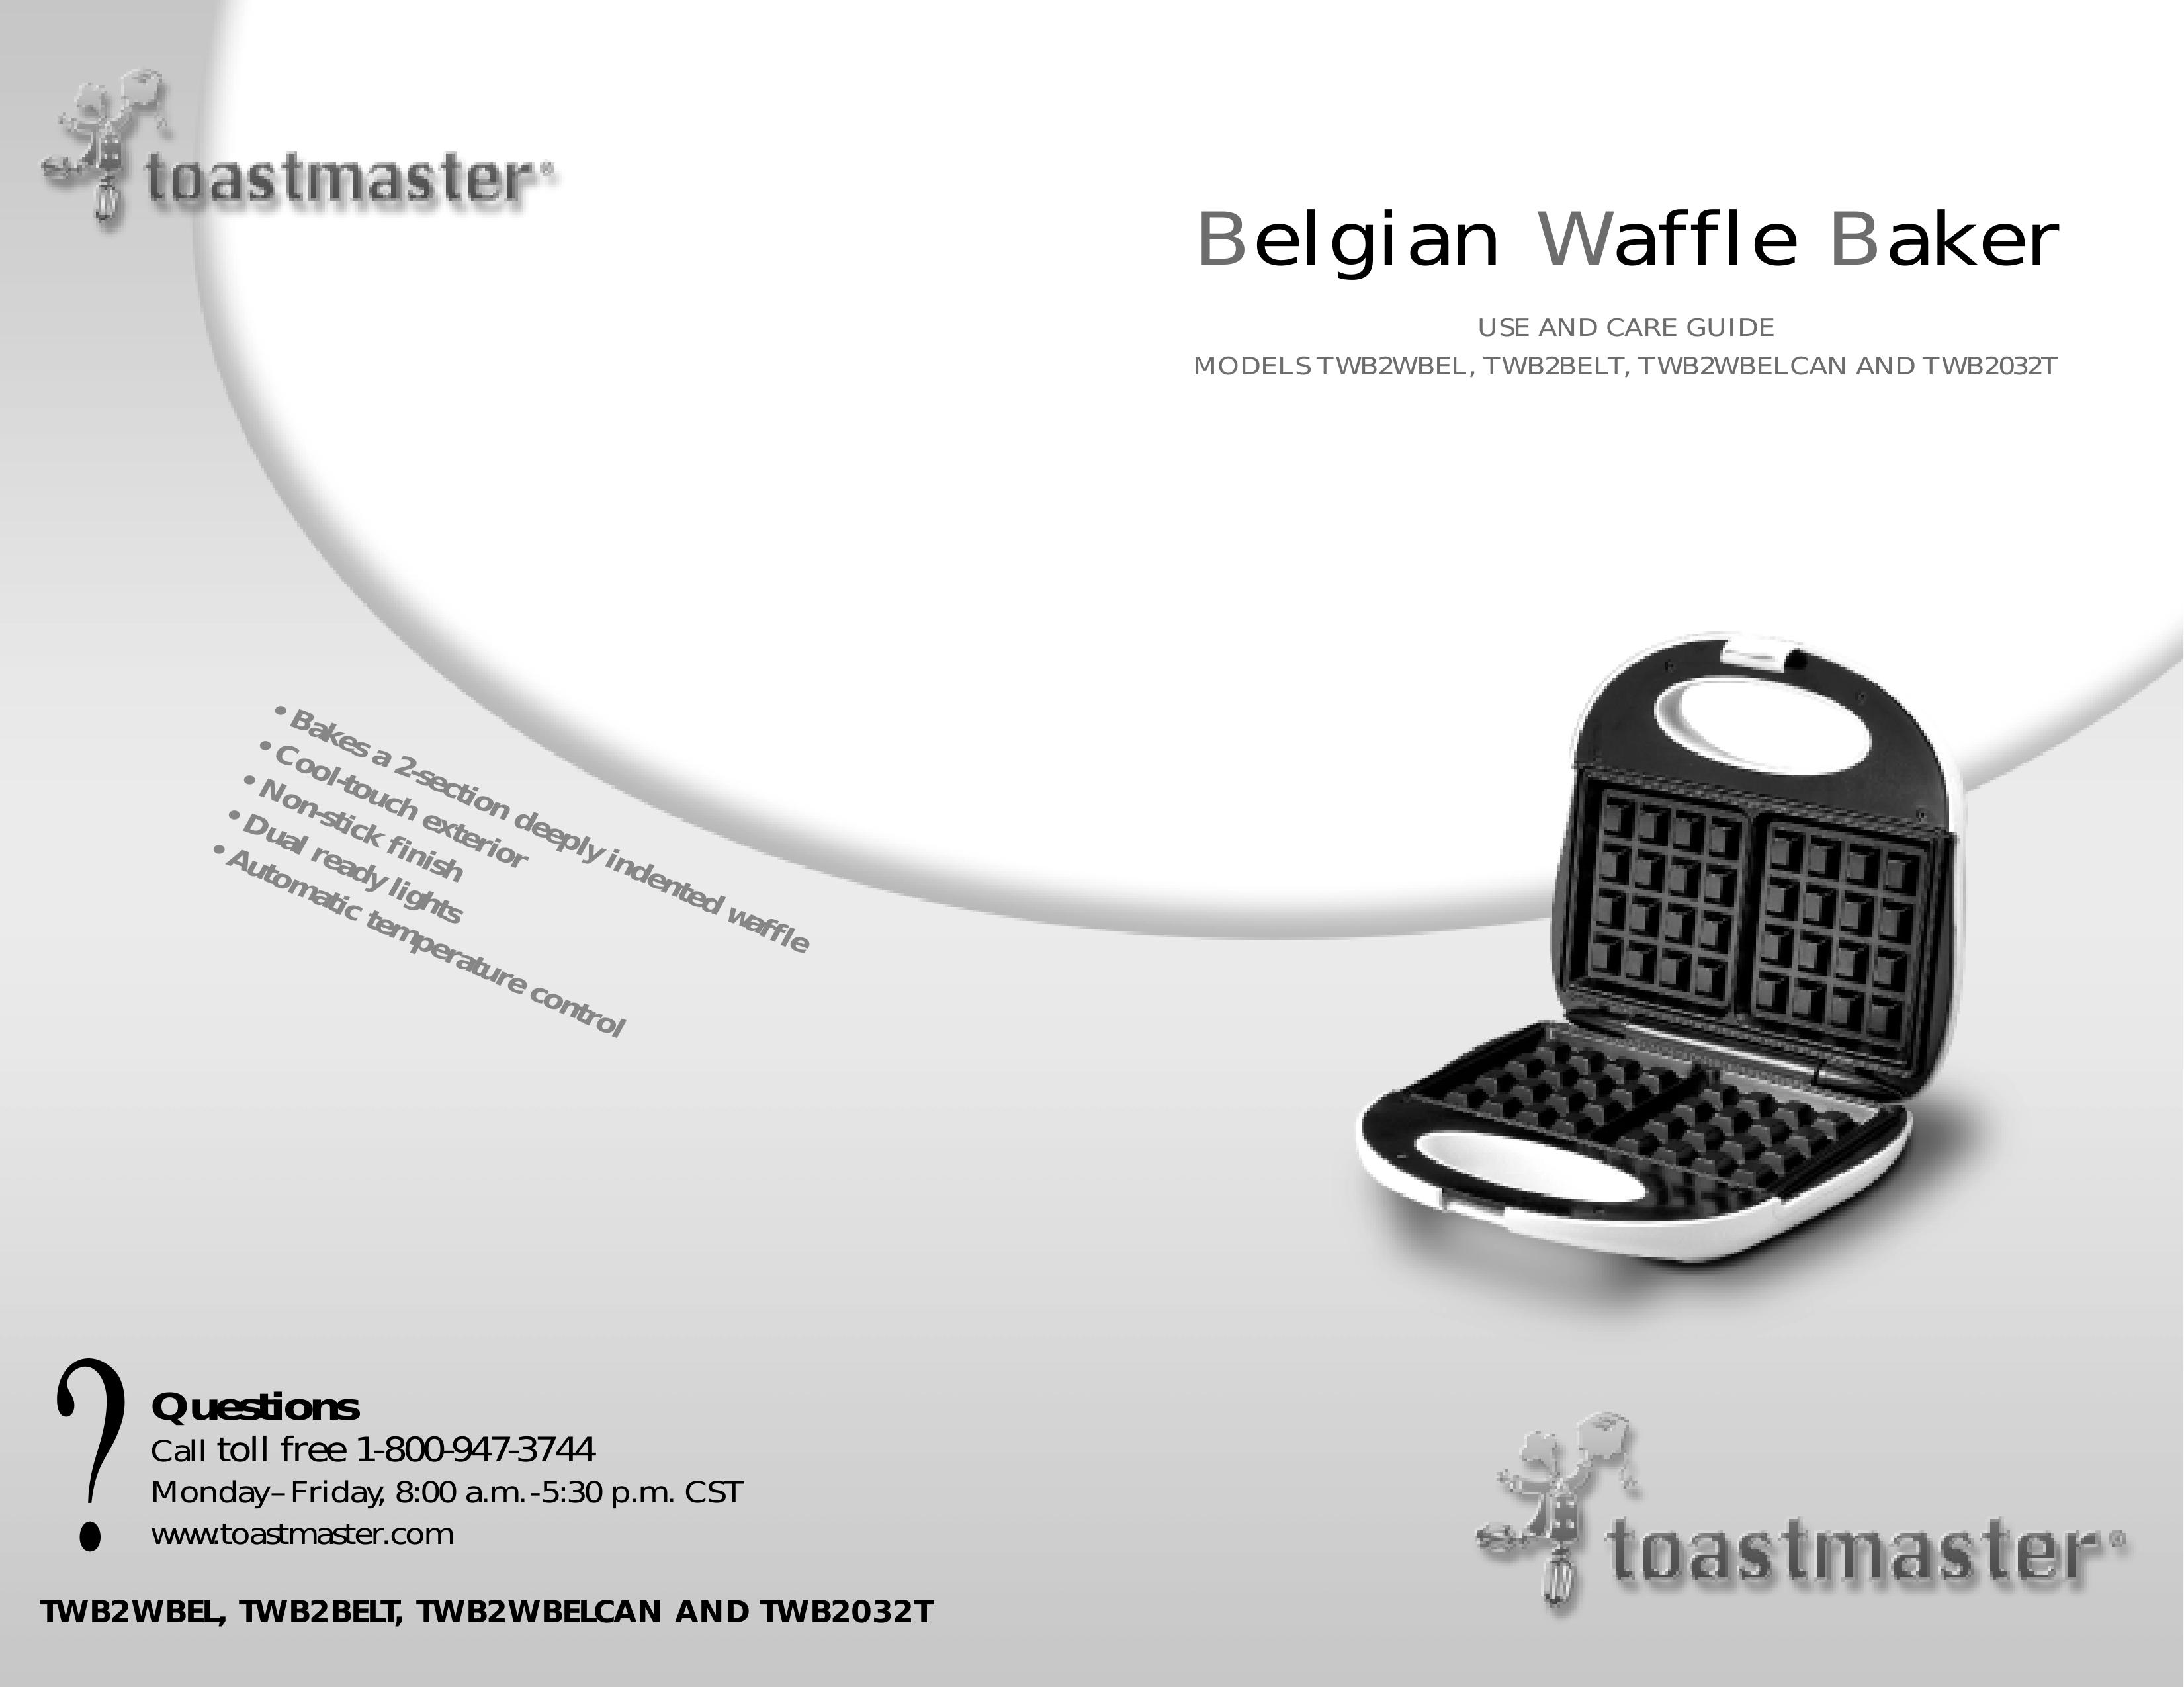 Toastmaster TWB2032T Waffle Iron User Manual